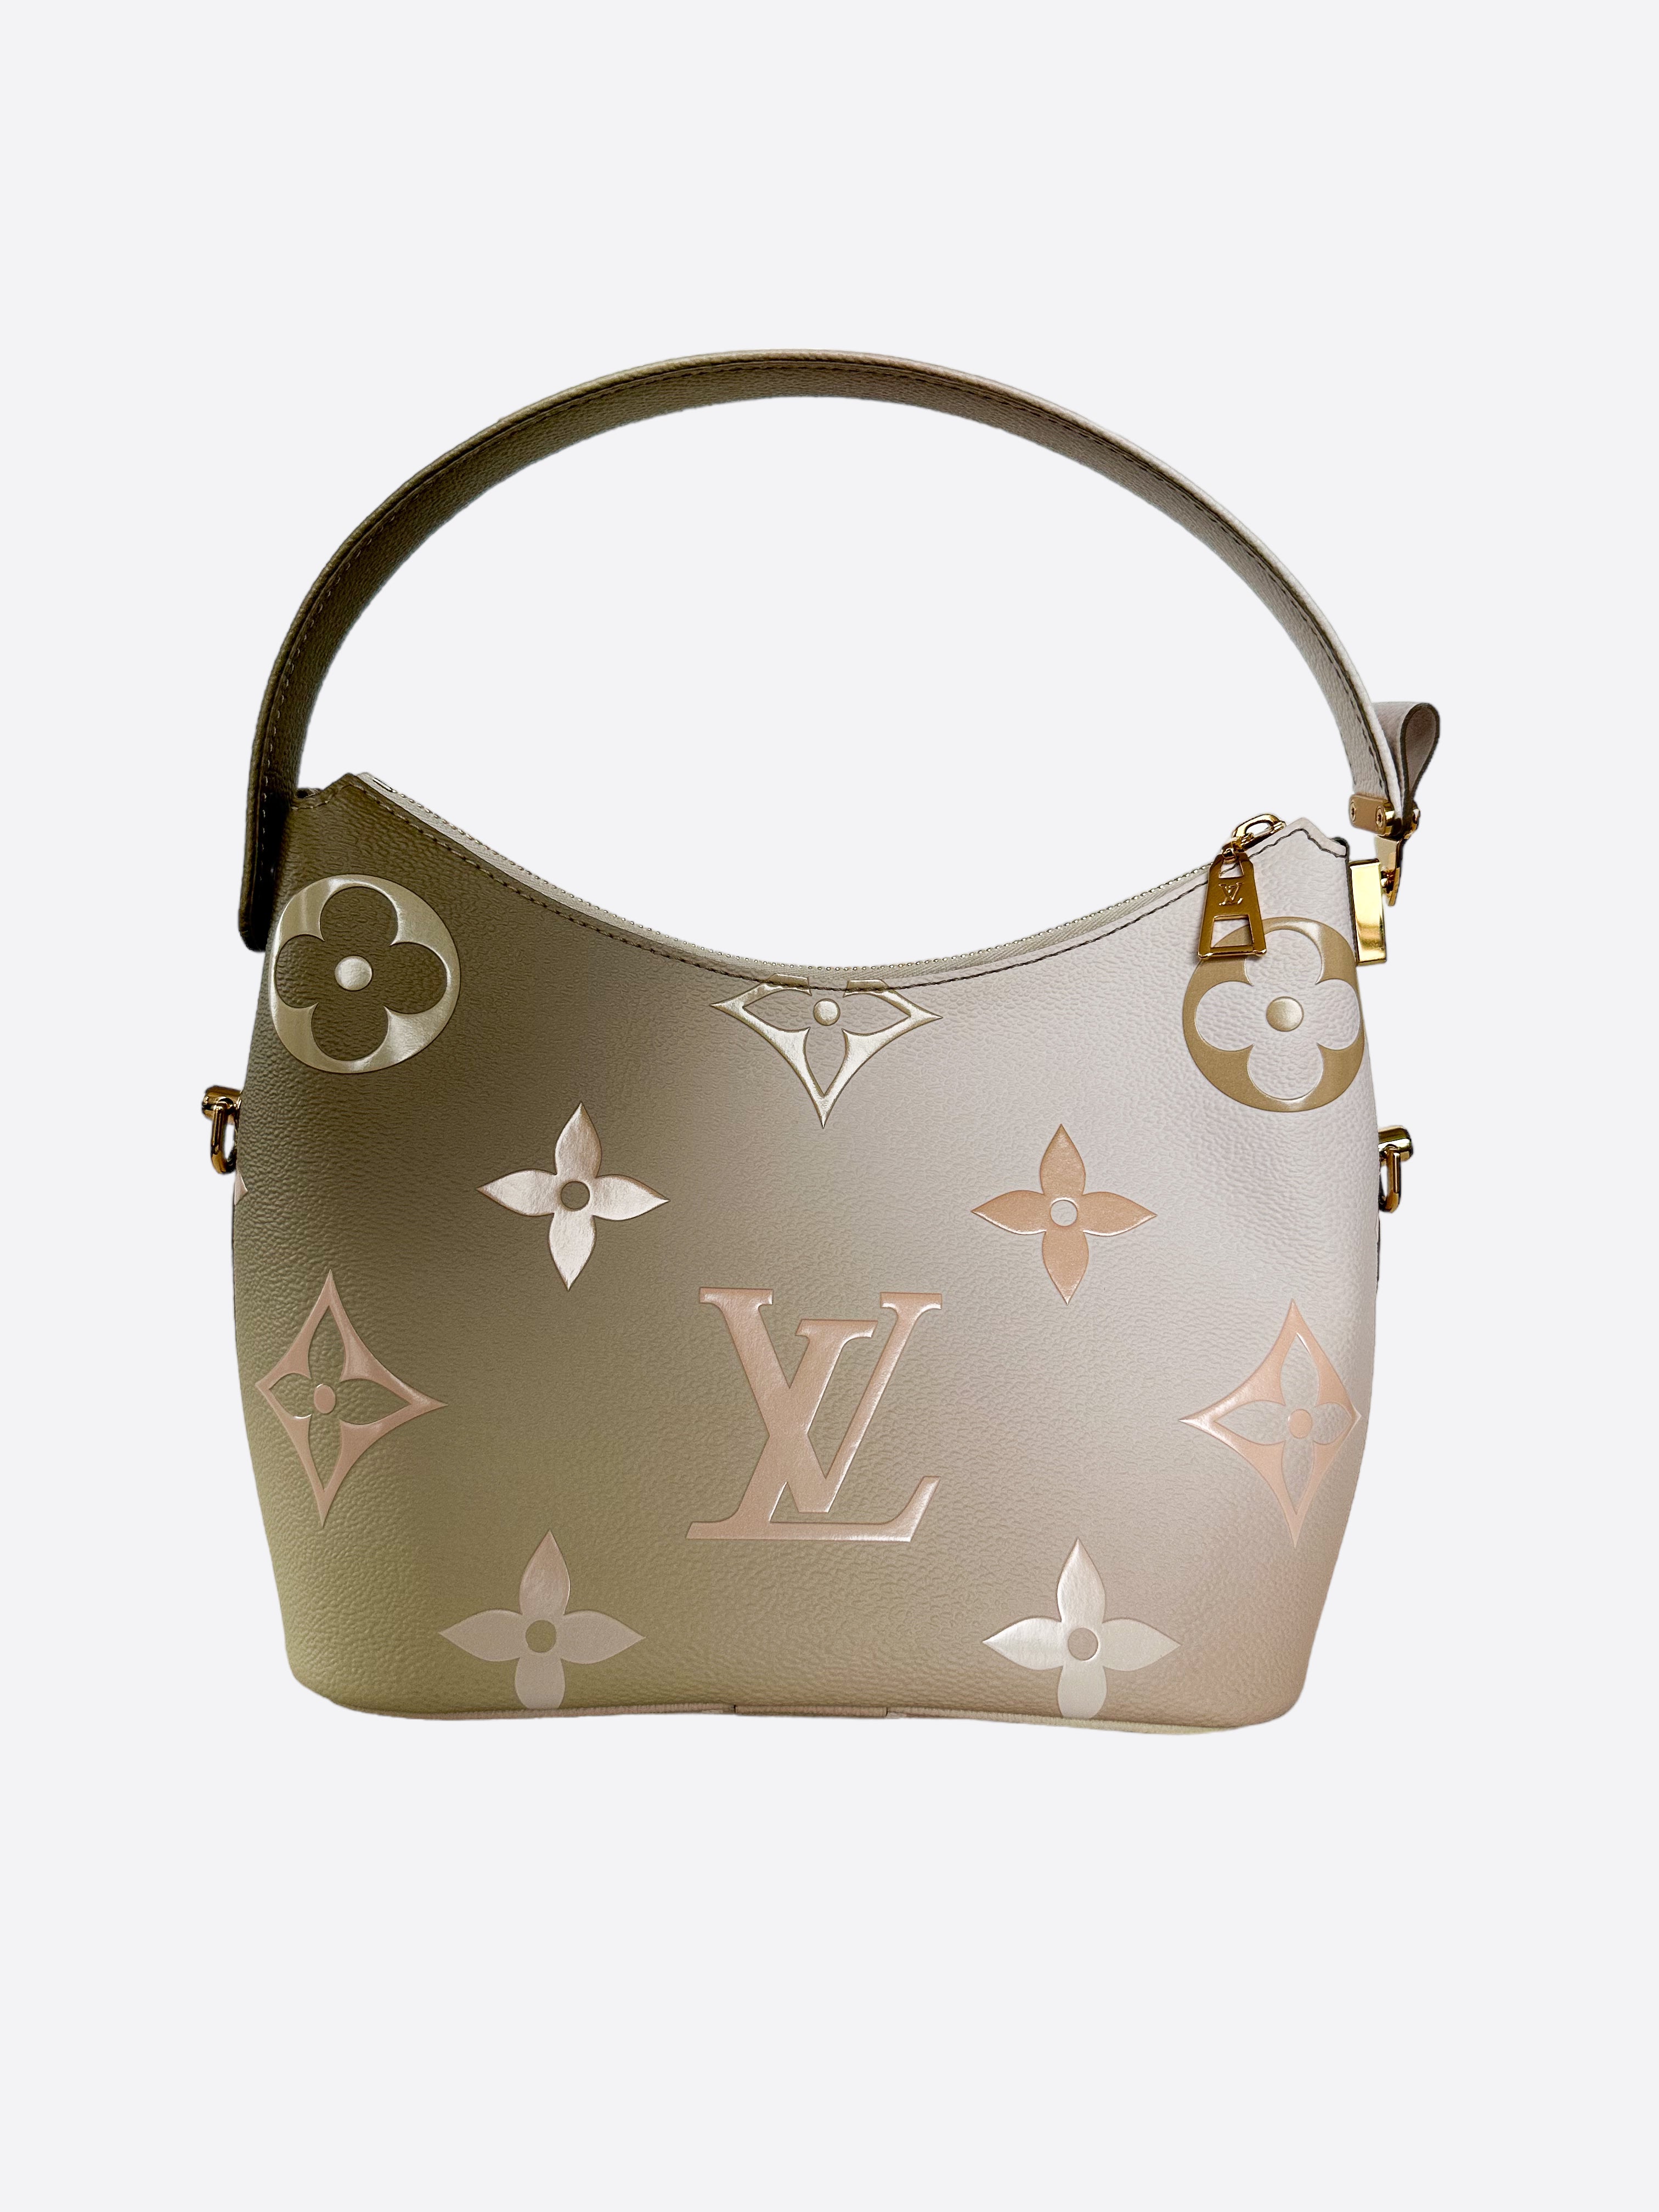 LV handbag unboxing 2022  LV Marshmallow Sunrise Pastel 